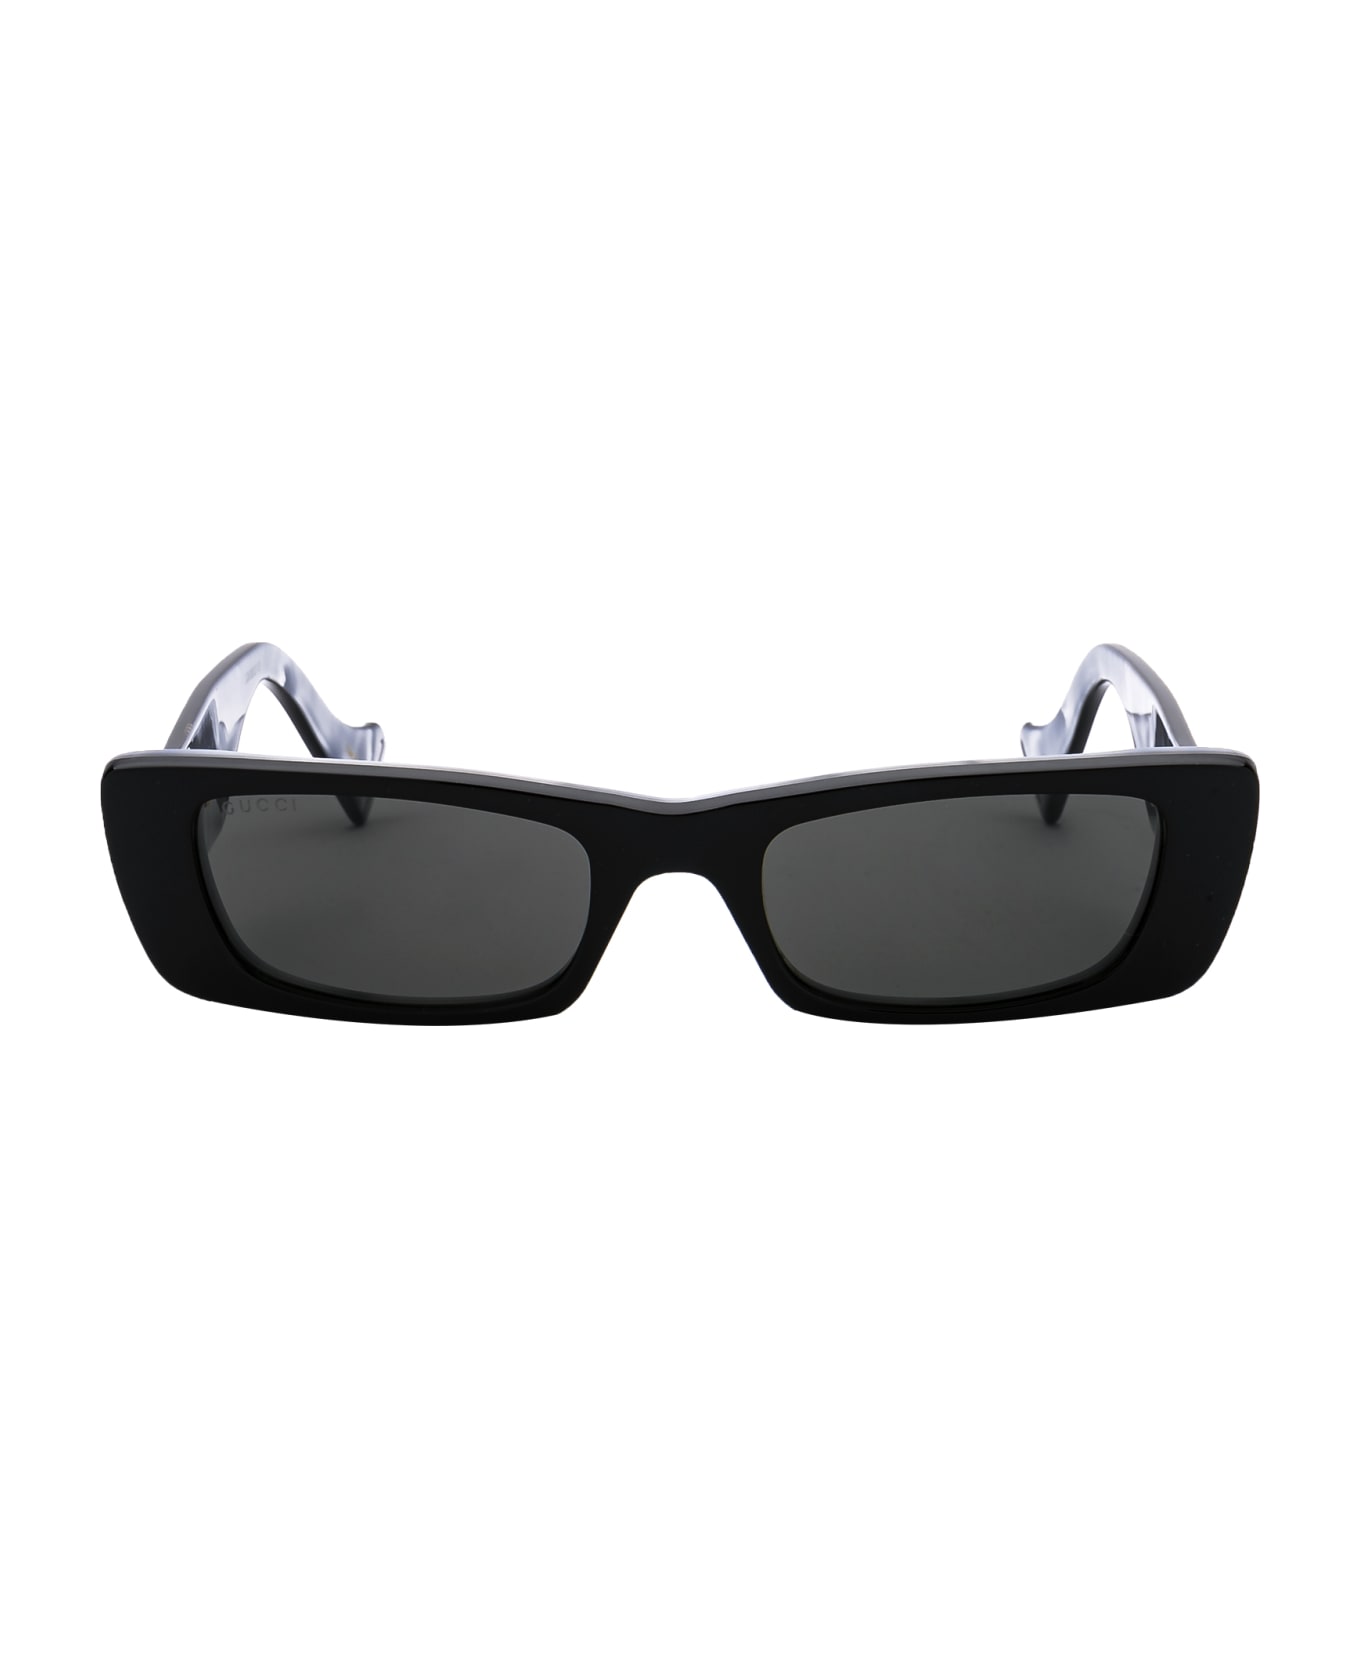 Gucci Eyewear Gg0516s Sunglasses - 001 BLACK BLACK GREY